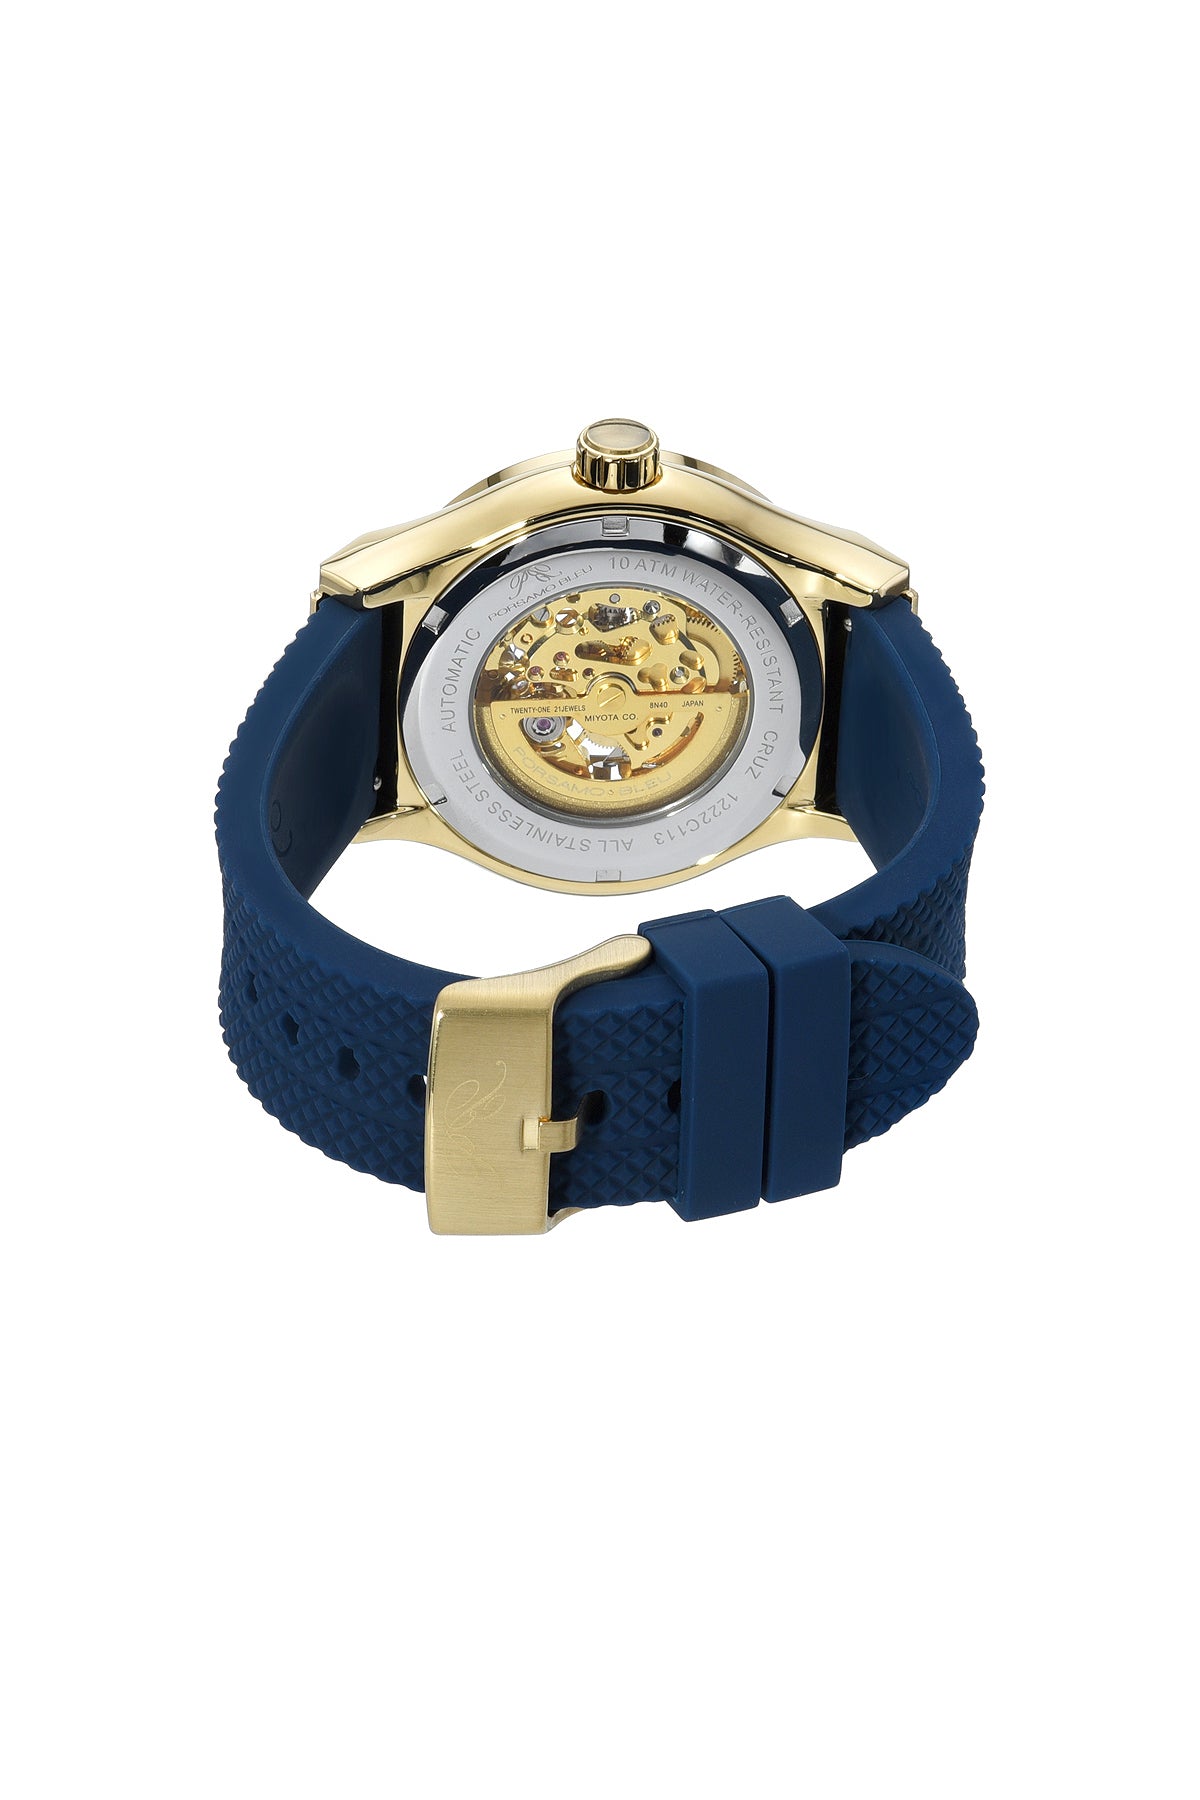 Porsamo Bleu Cruz Luxury Automatic Men's Silicon Strap Watch, With Skeleton Dial, Gold Blue 1222CCRR